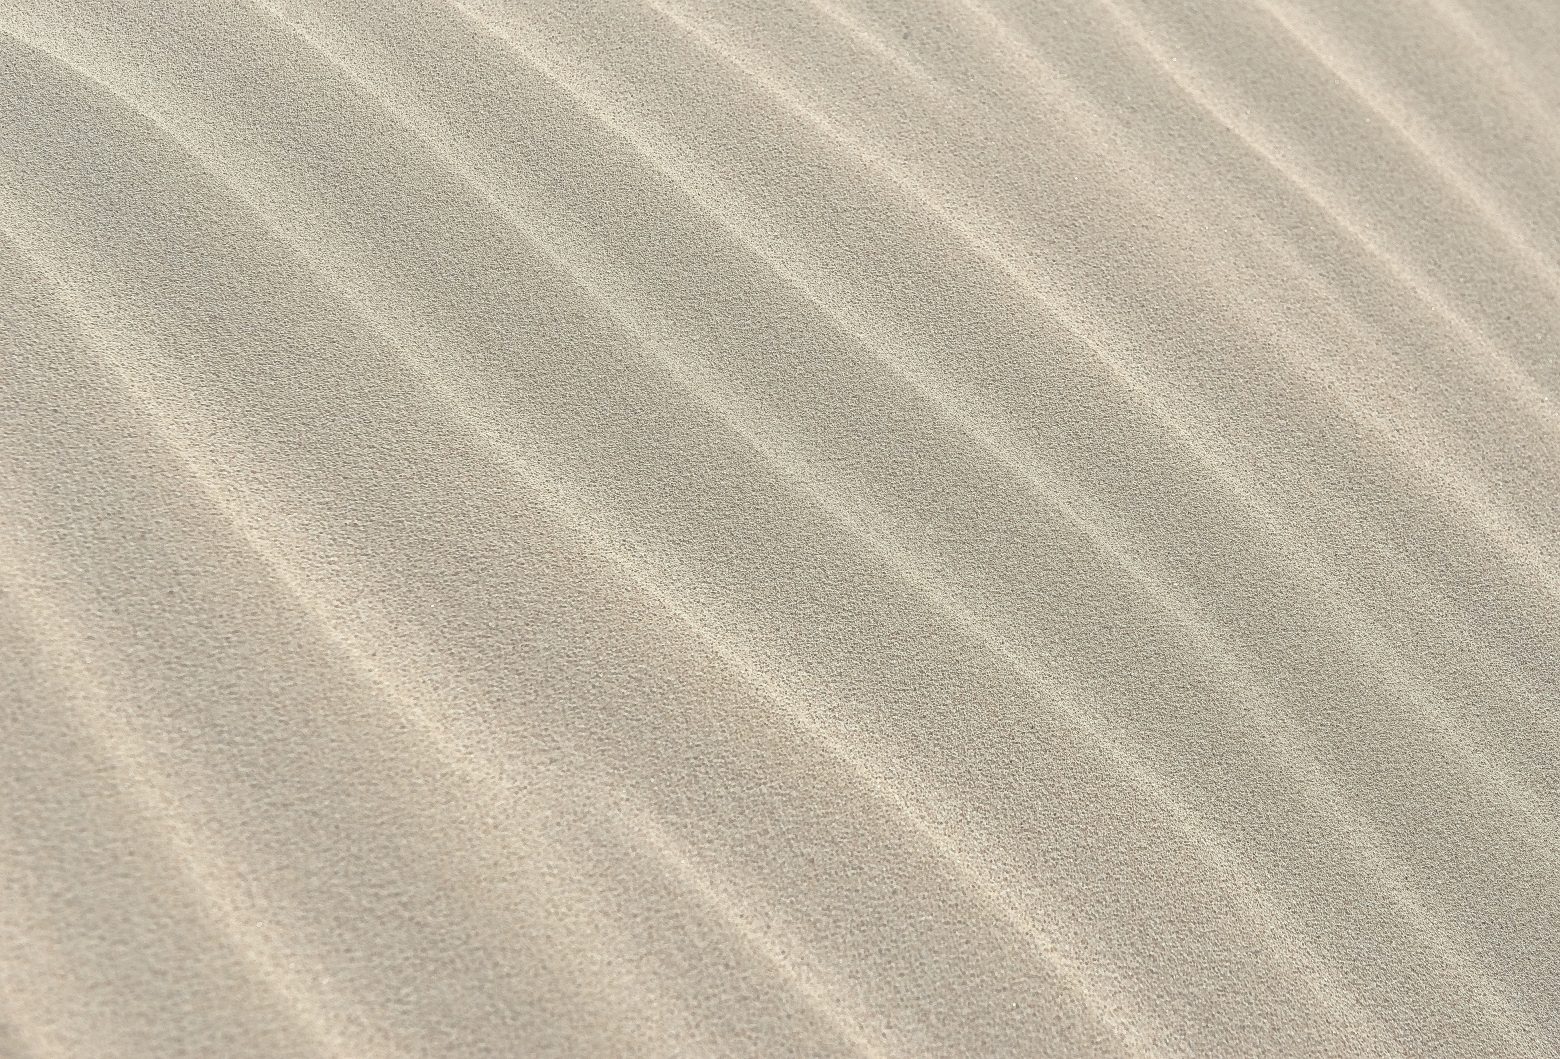 sand-2005066